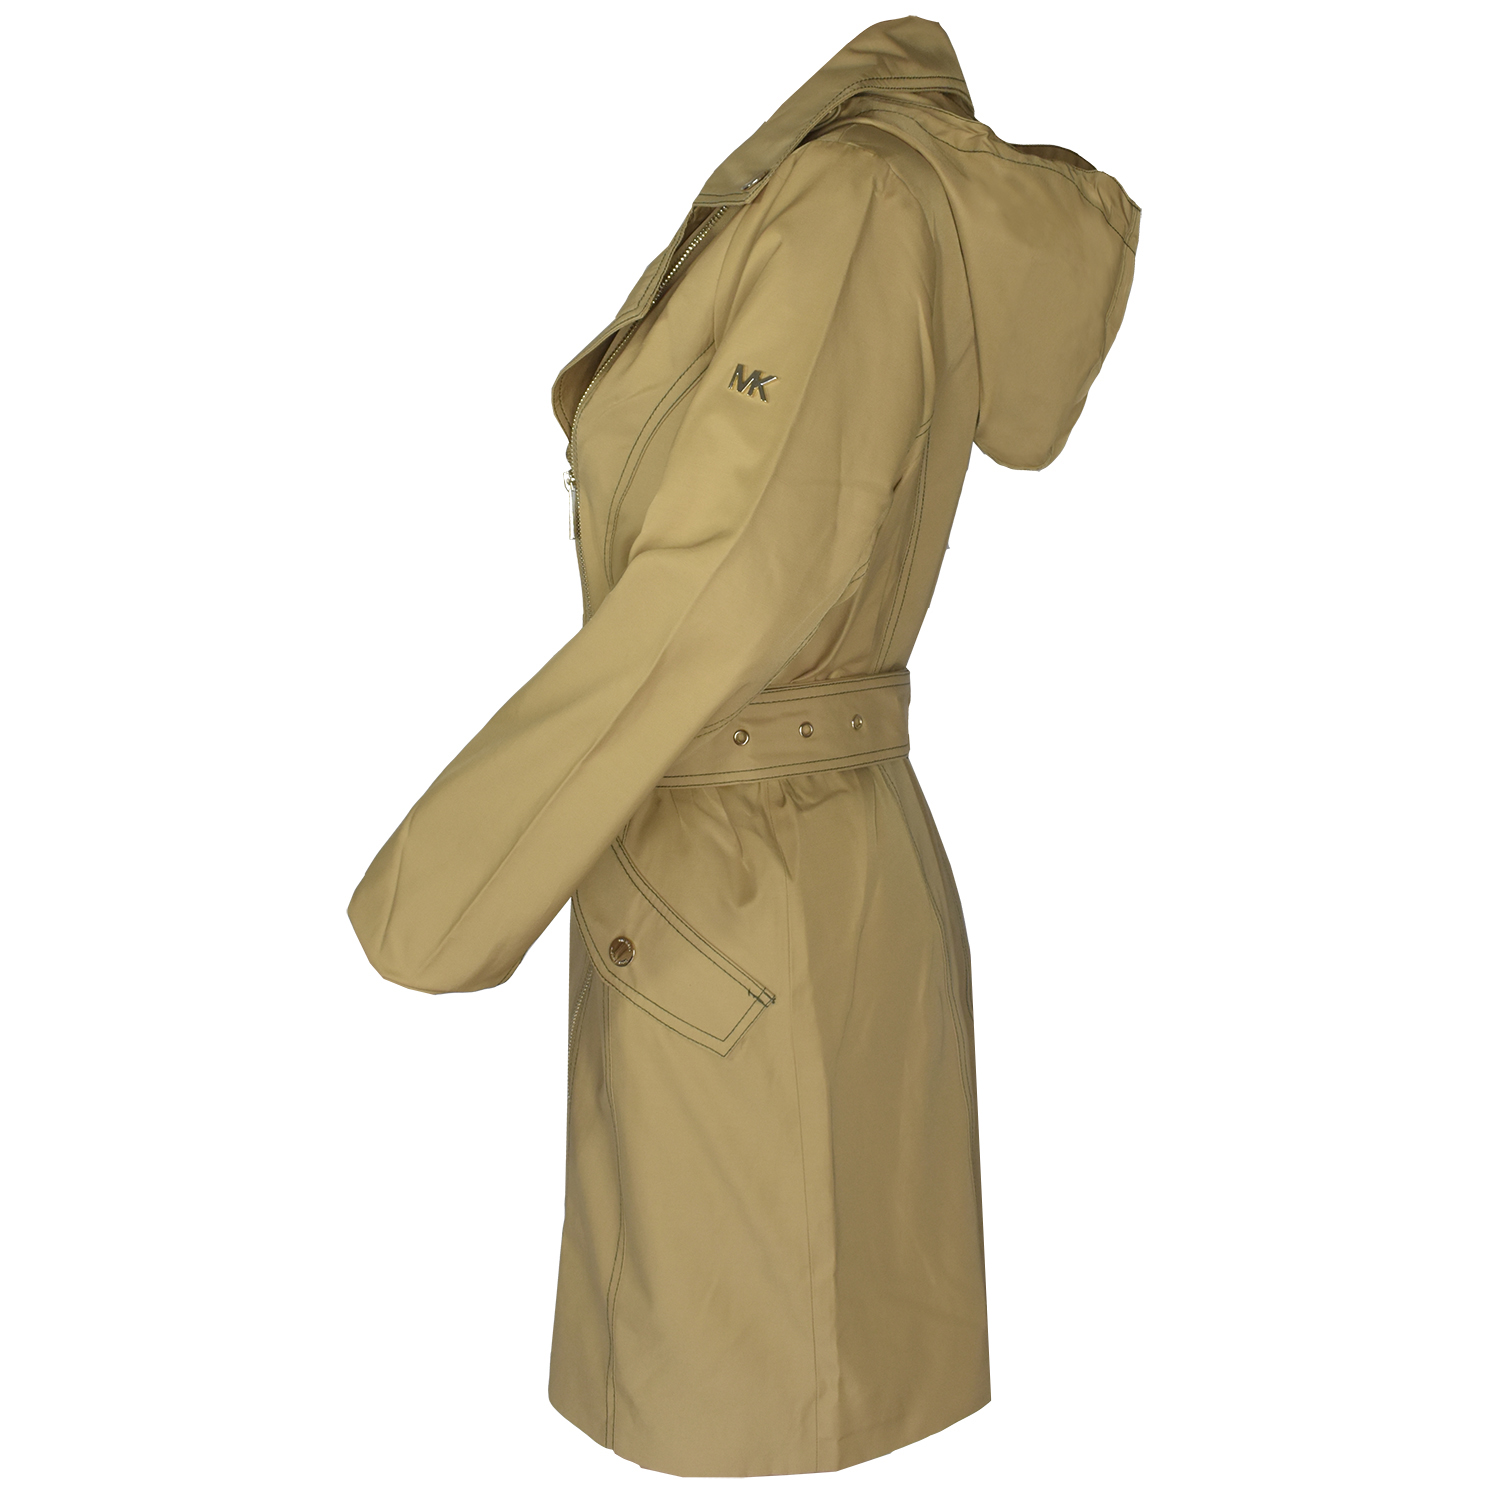 Michael Michael Kors Women's Khaki Asymmetrical Closure Belted Trench Coat (S) - image 2 of 2